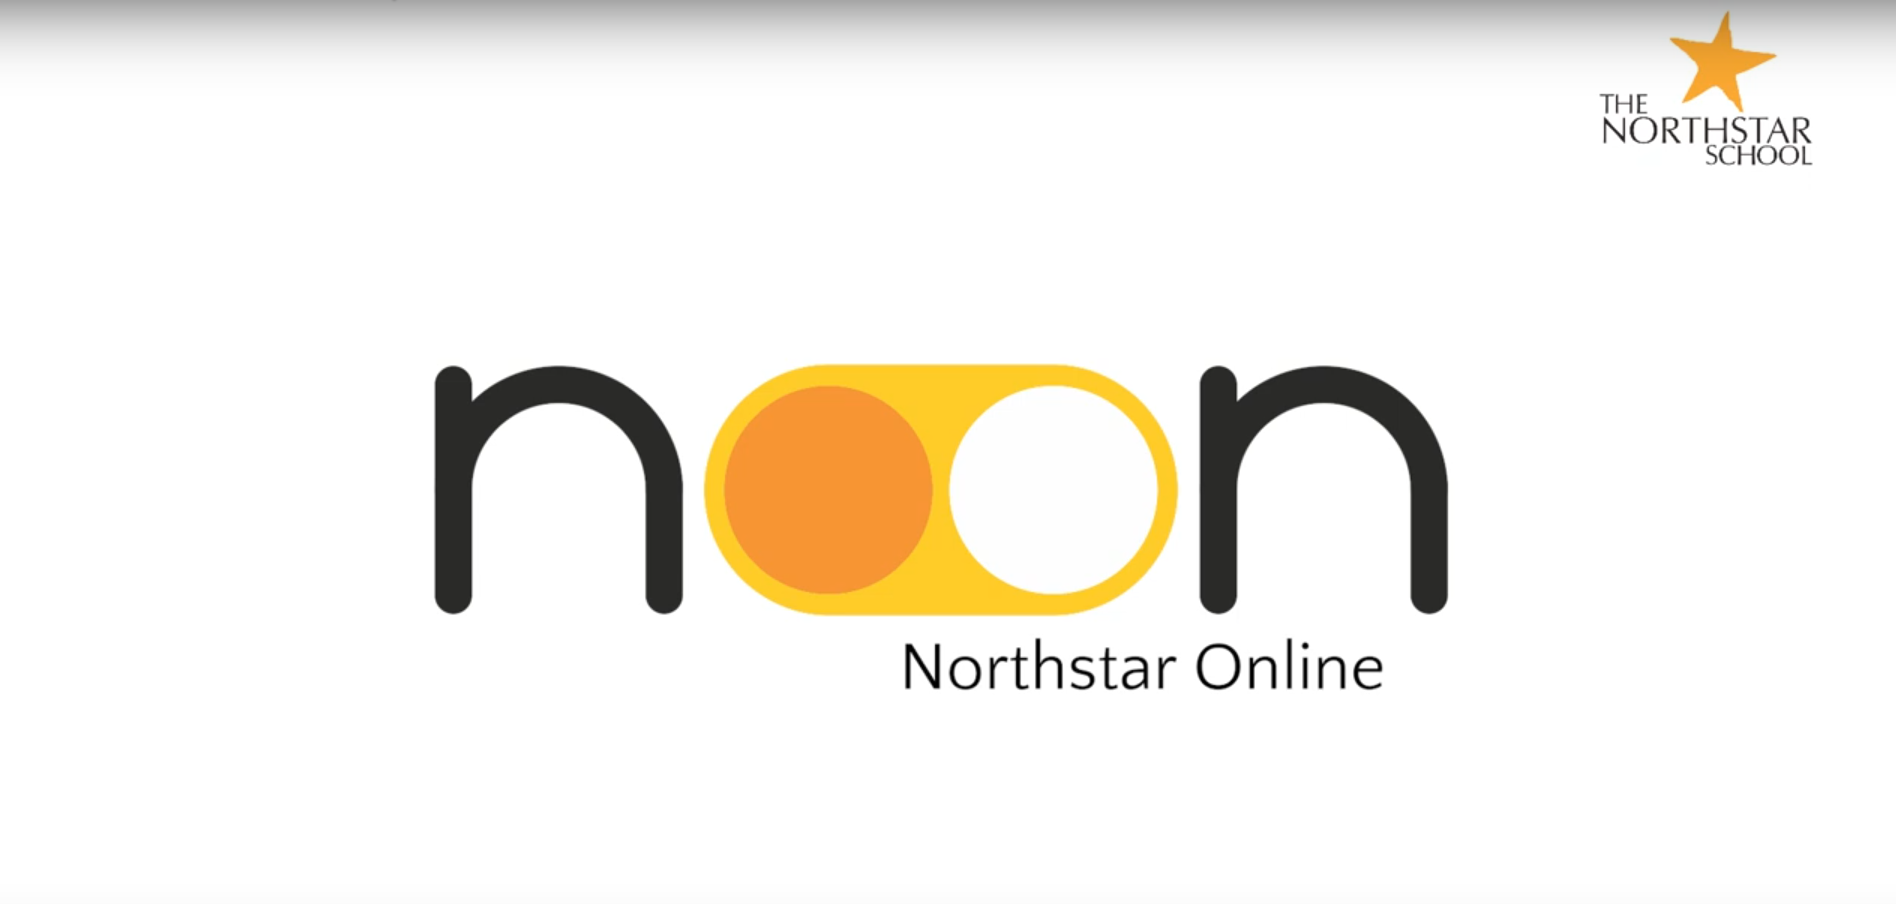 Announcing Noon: Northstar Online